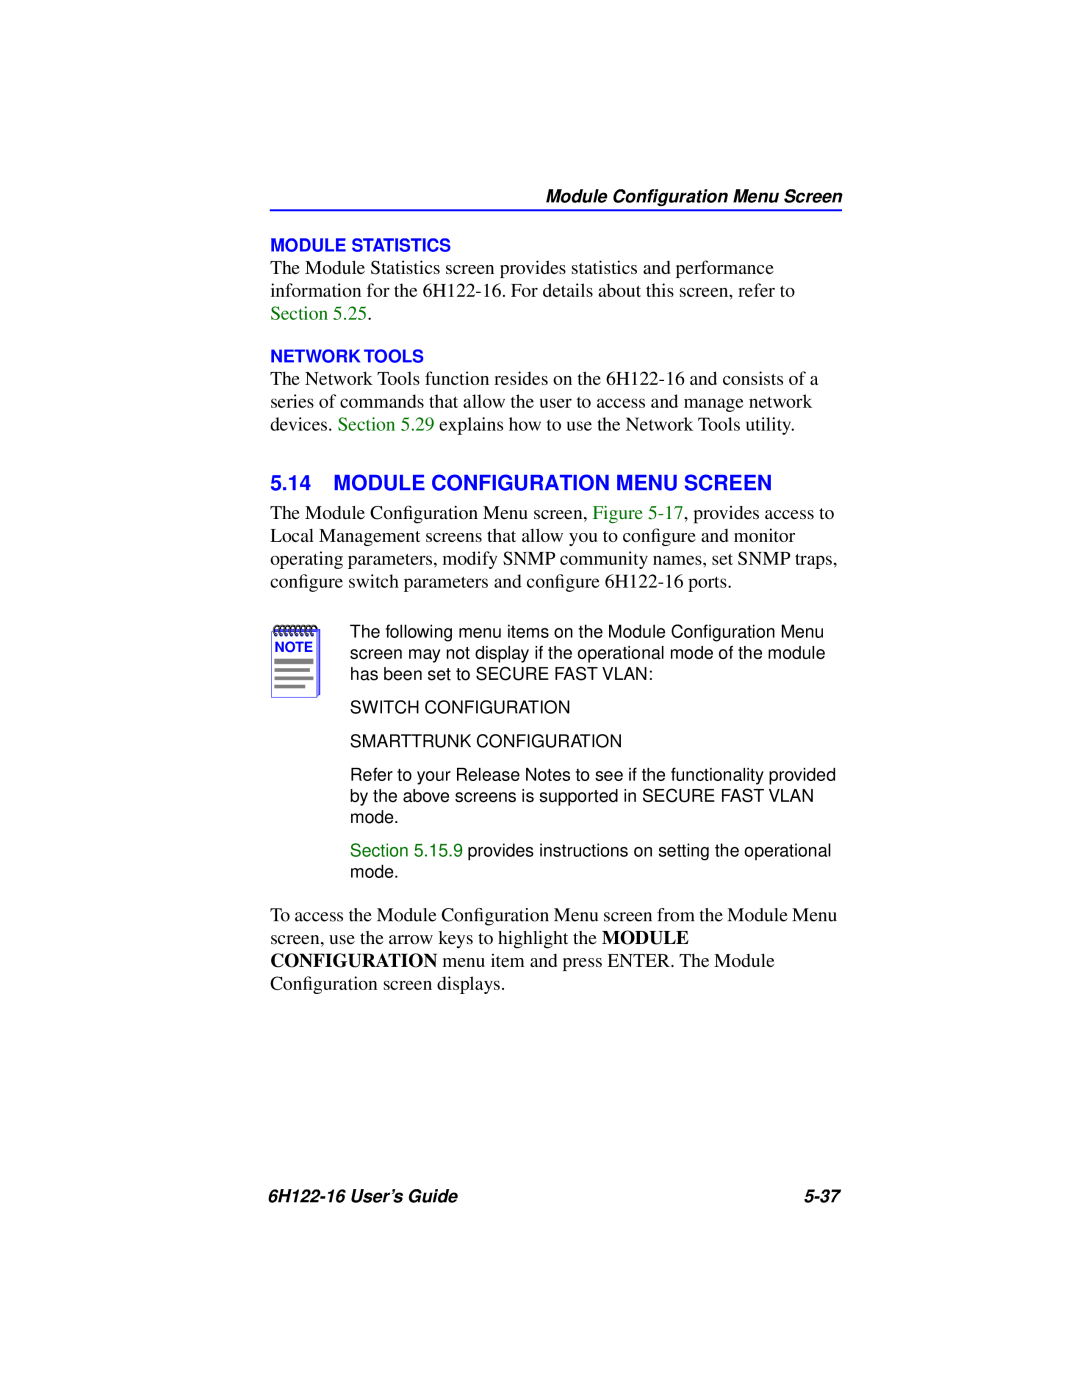 Cabletron Systems 6H122-16 manual Module Configuration Menu Screen, Module Statistics, Network Tools 